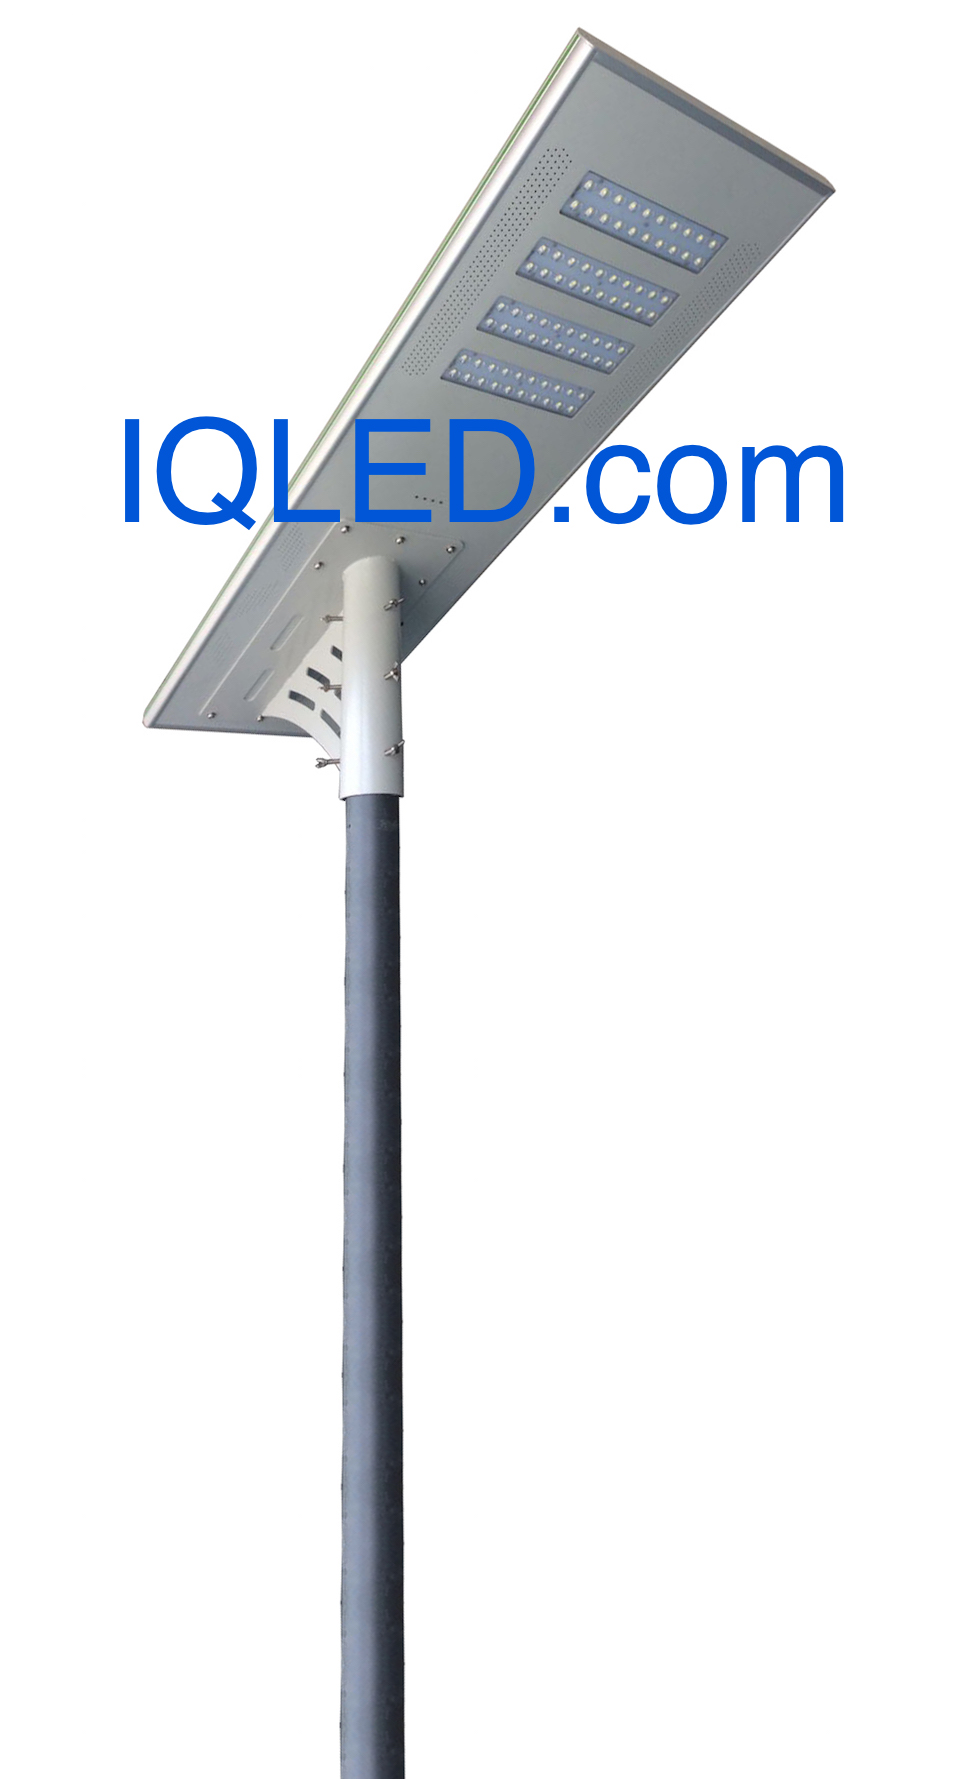 IQLED.com Airport Security Lighting